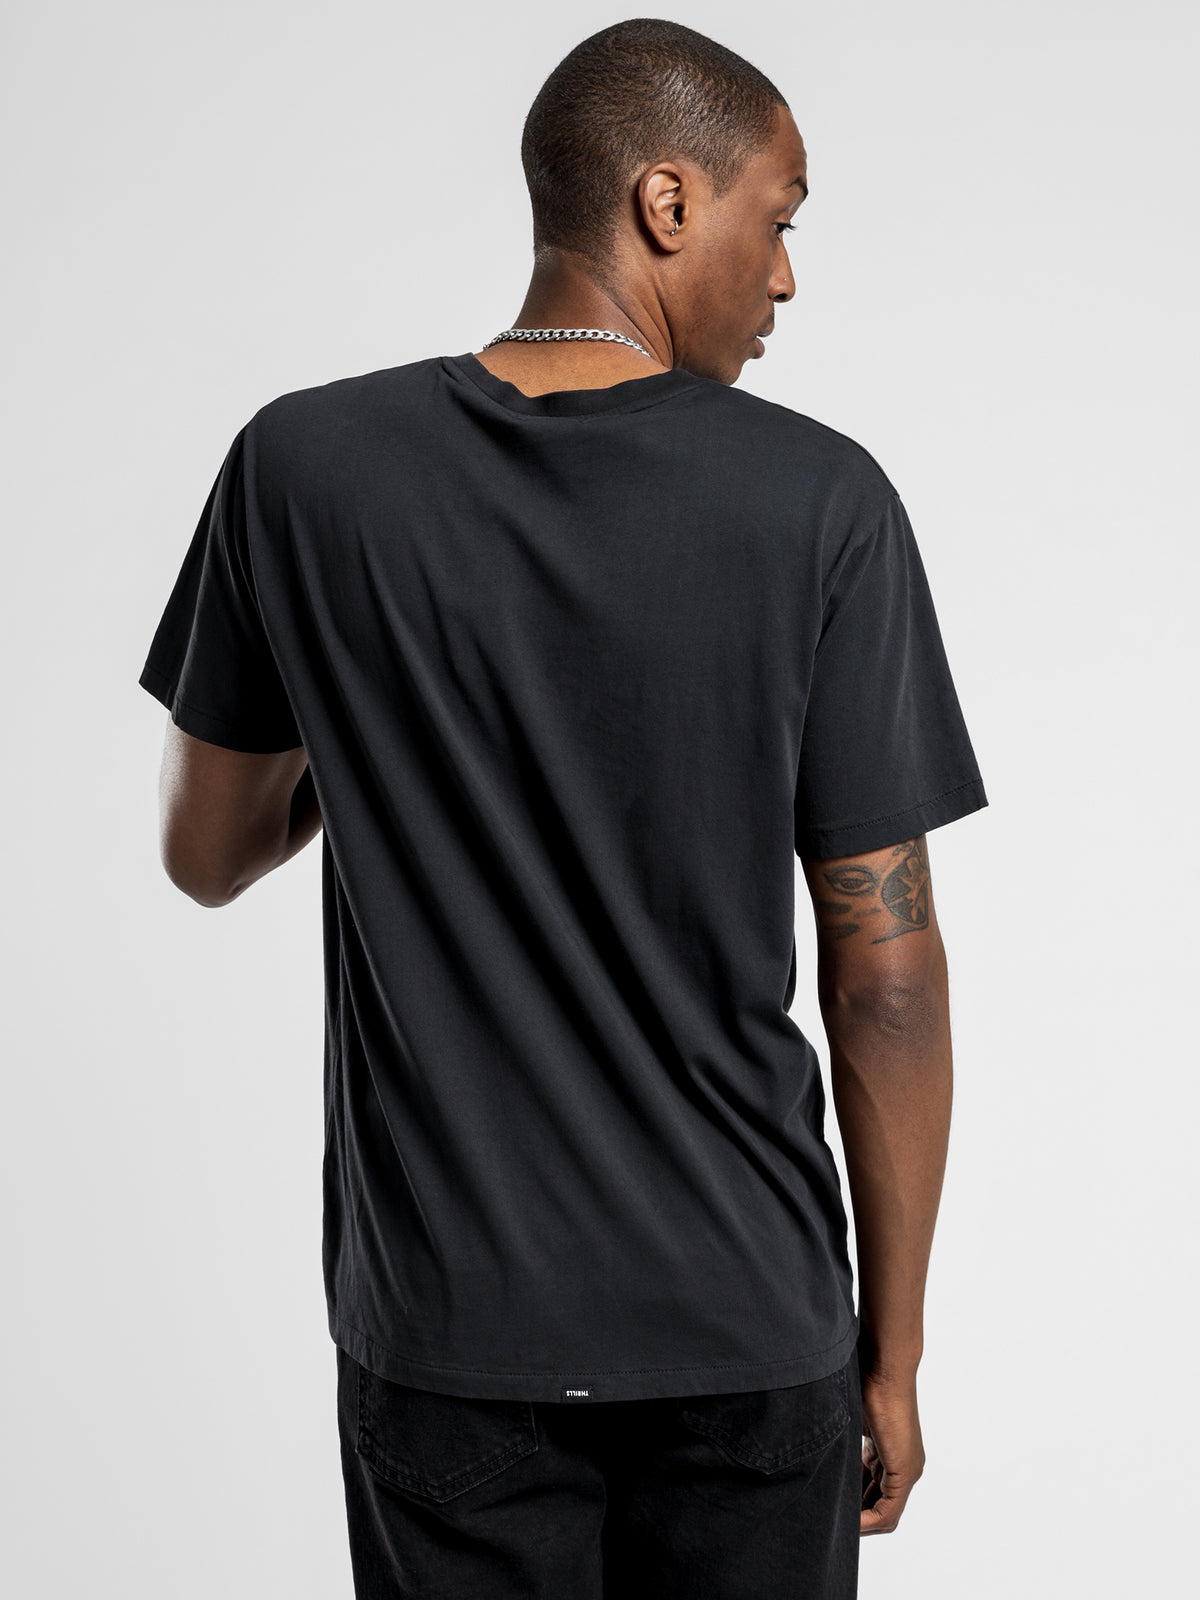 Palm Of Thrills Merch Fit T-Shirt in Black